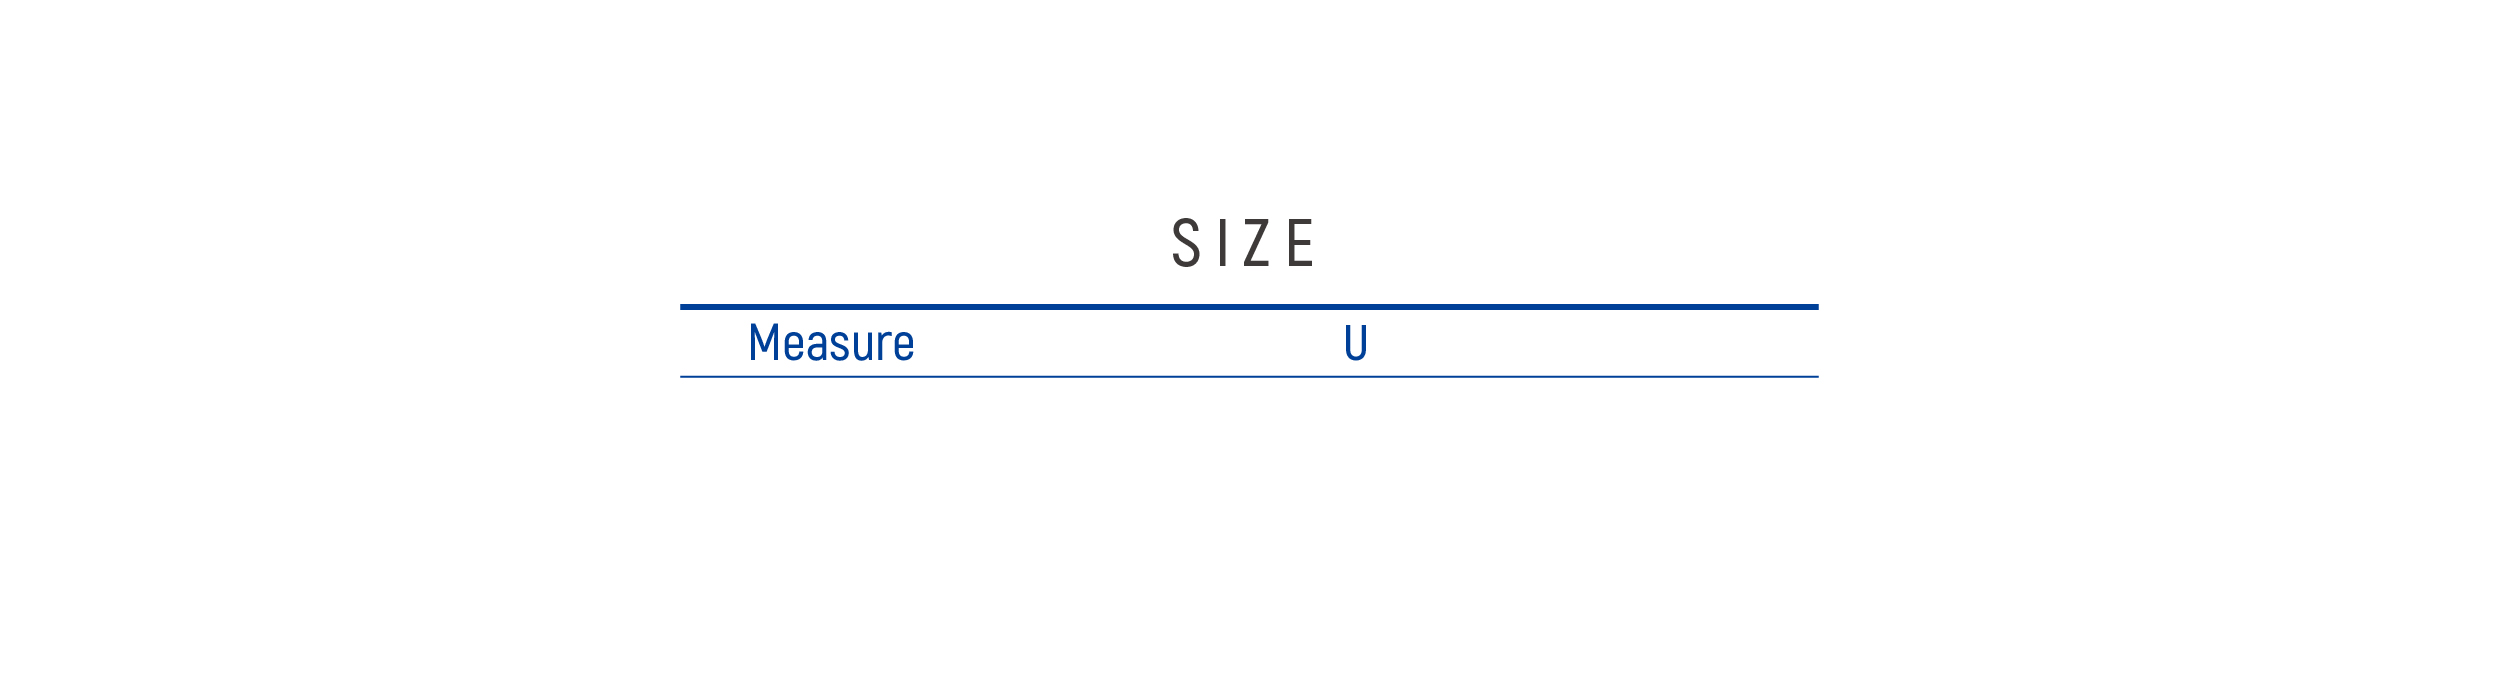 DR-E022 Size table image